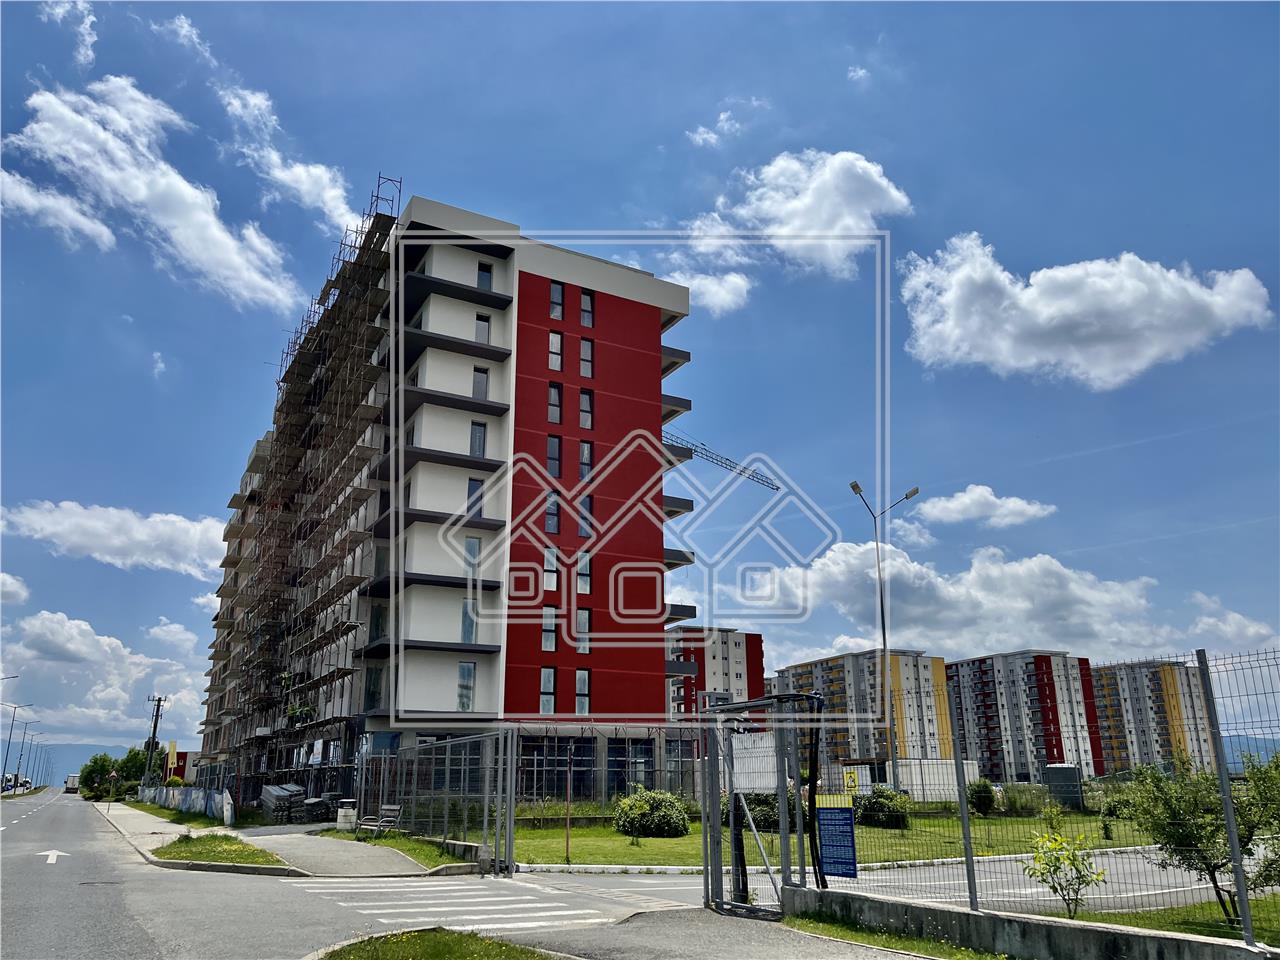 Mihai Viteazu Residential Ensemble - Sibiu Real Estate